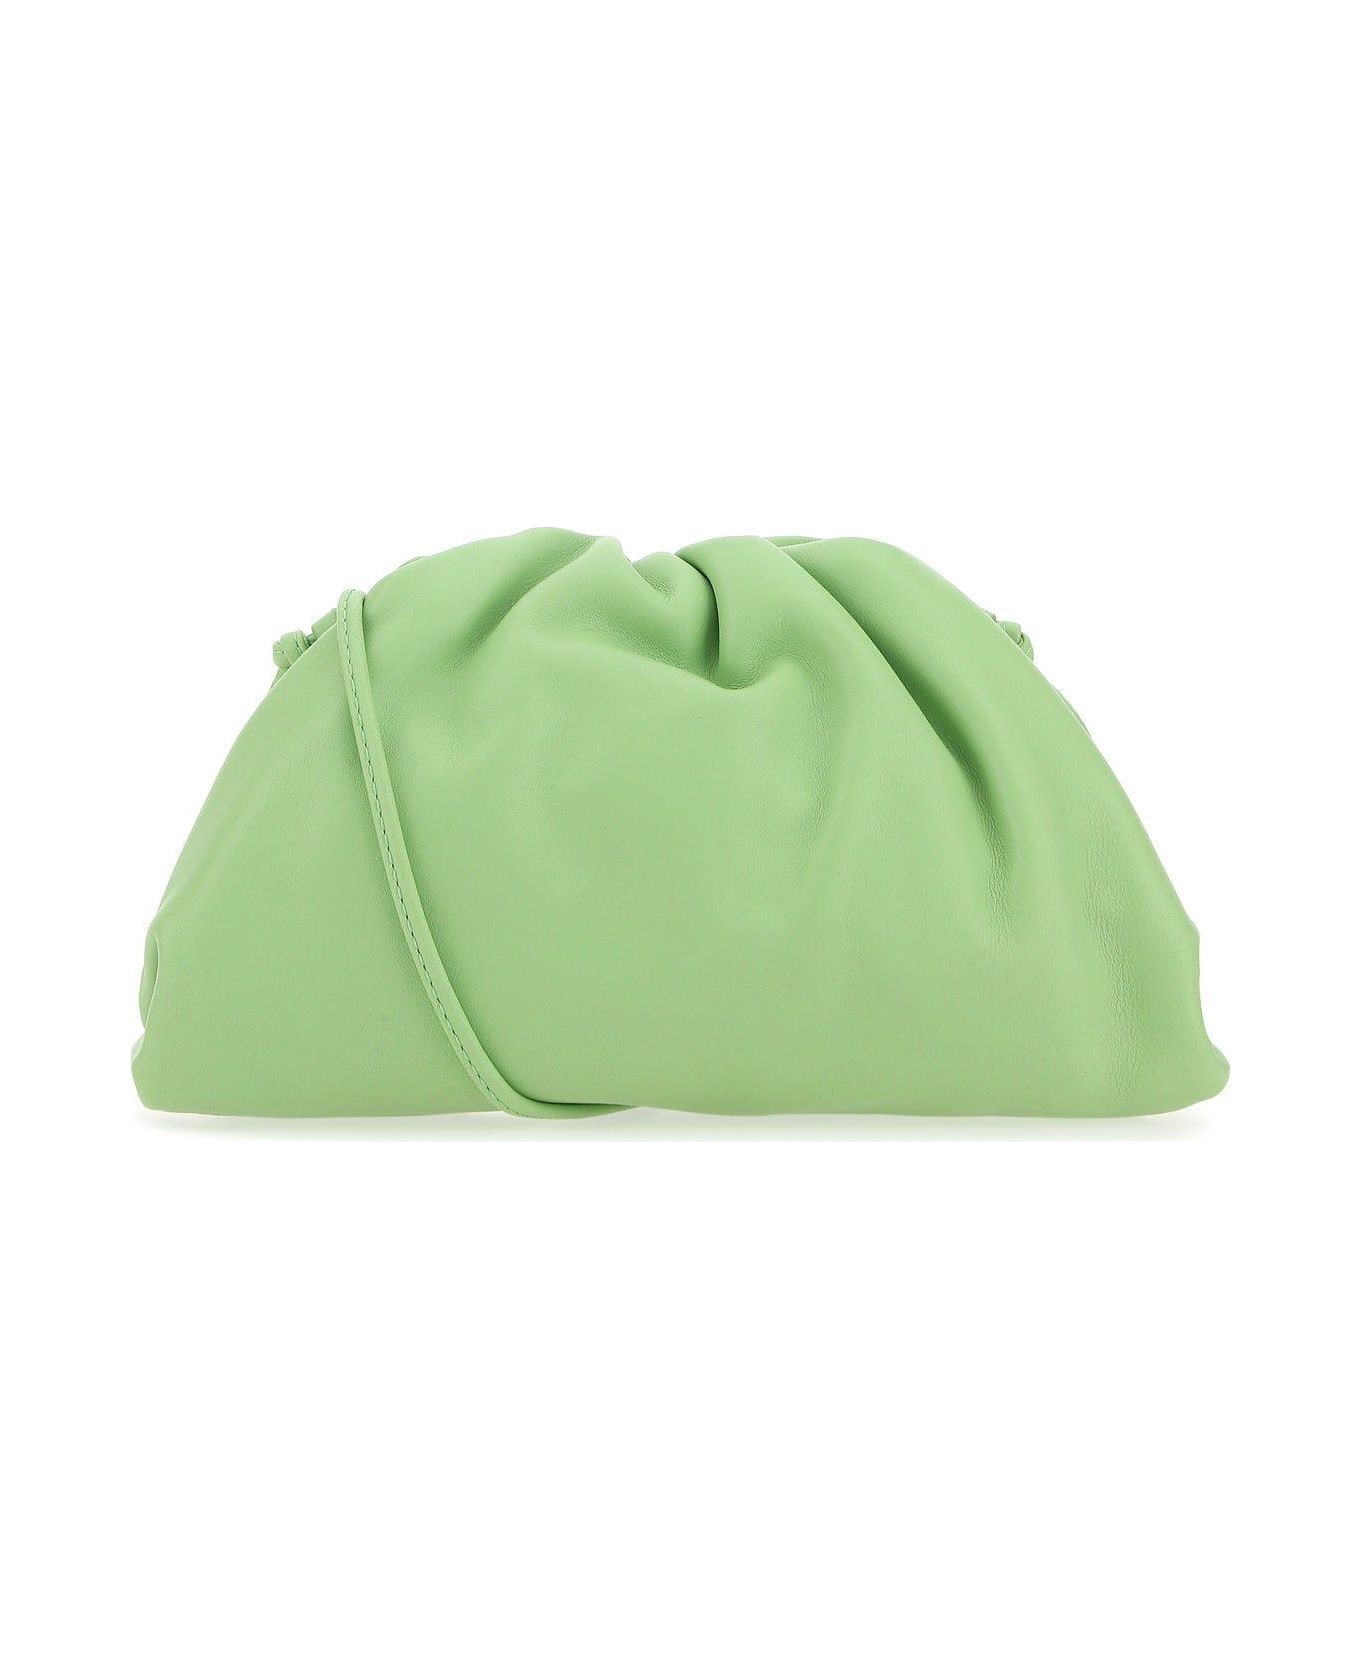 Bottega Veneta Pastel Green Nappa Leather Mini Pouch Clutch